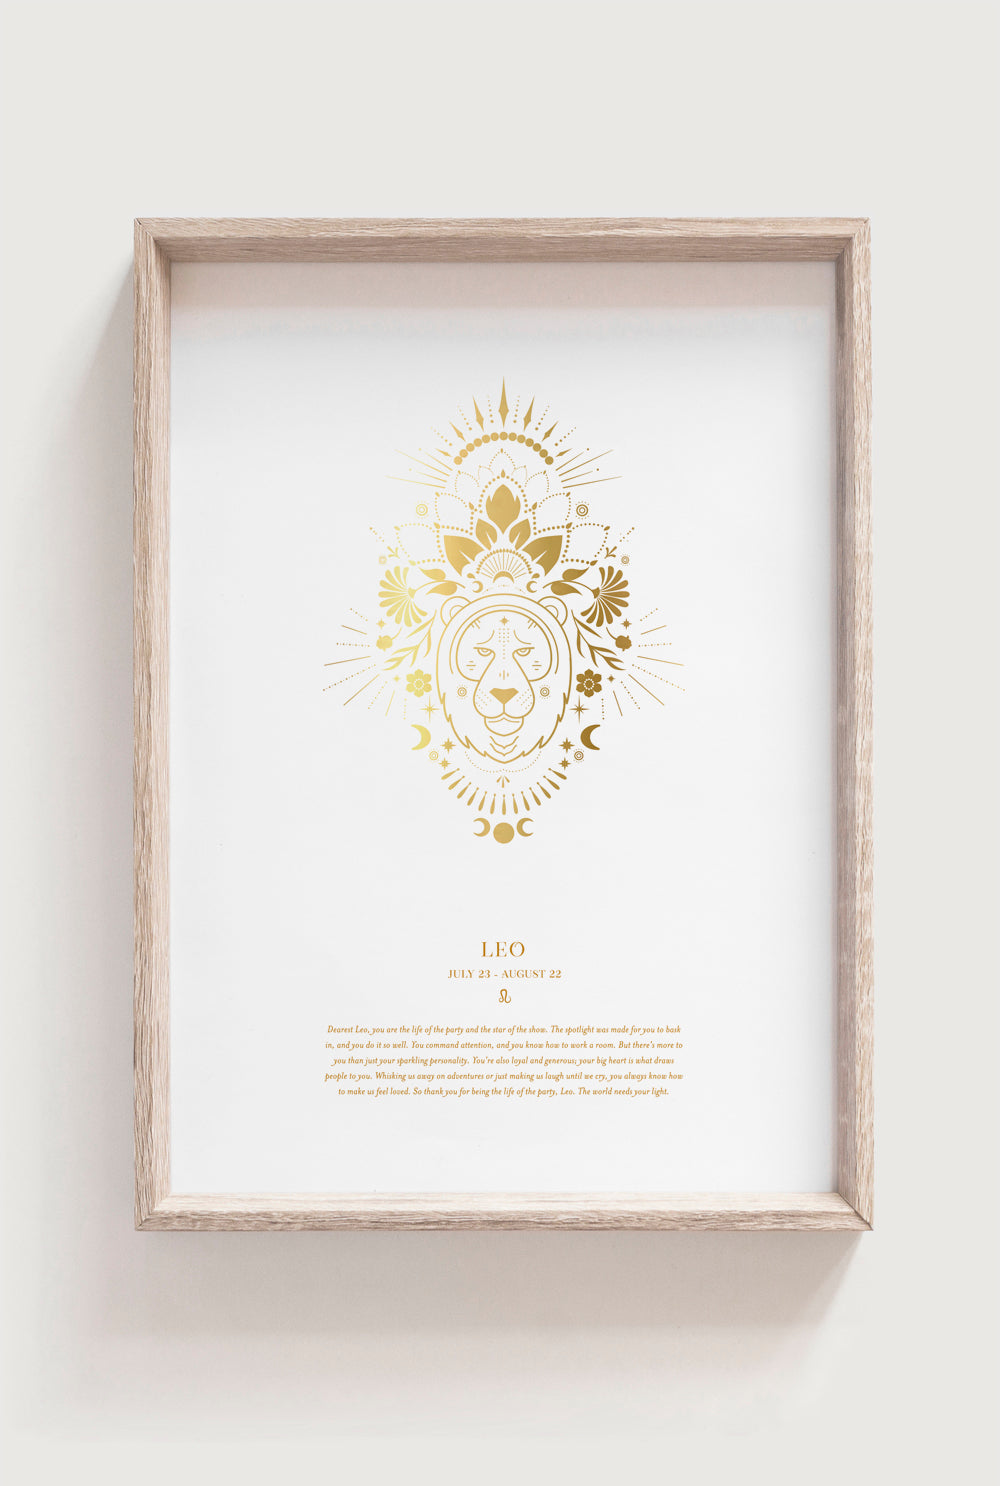 Leo Zodiac Gold Star Sign Art Print Birthday Gift